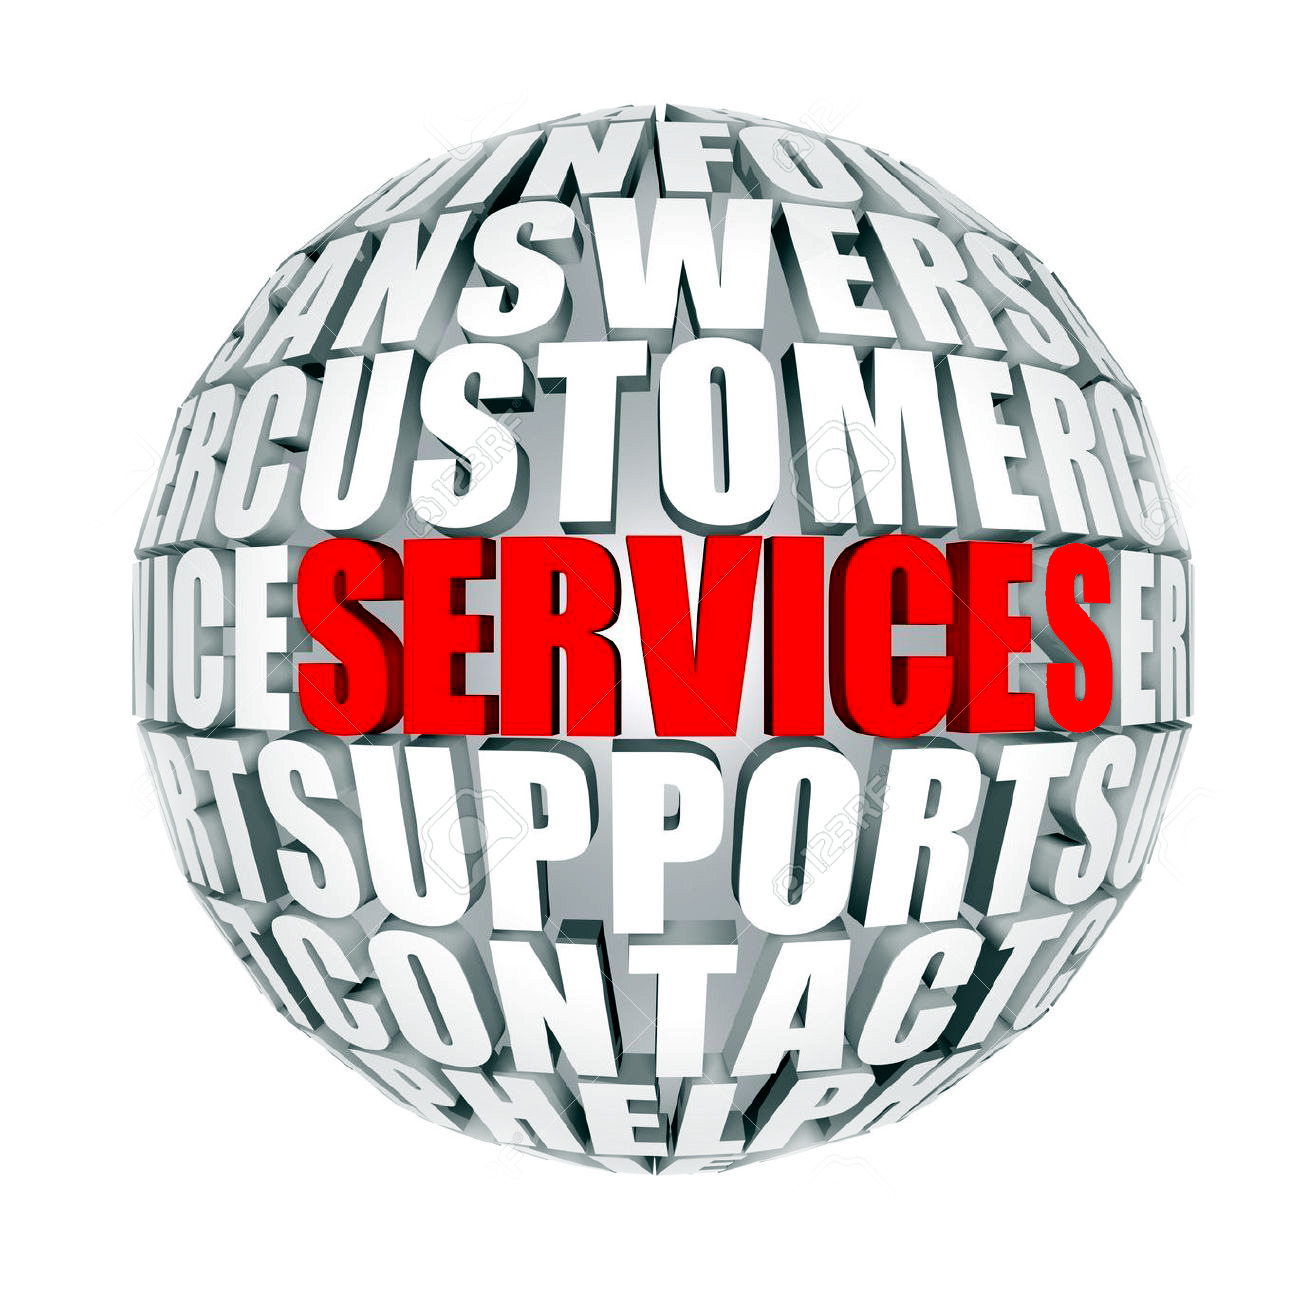 9747366-service-customer-service-support.jpg